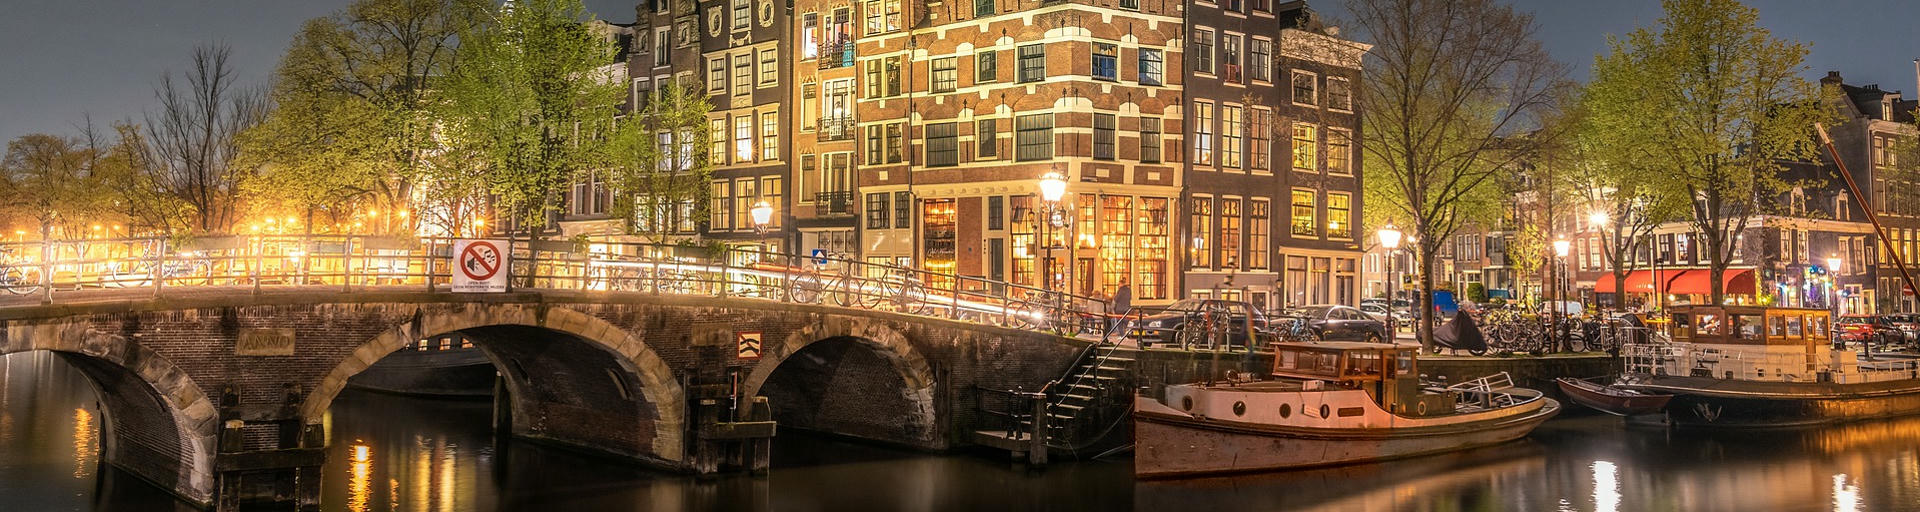 Kanal in Amsterdam Europa